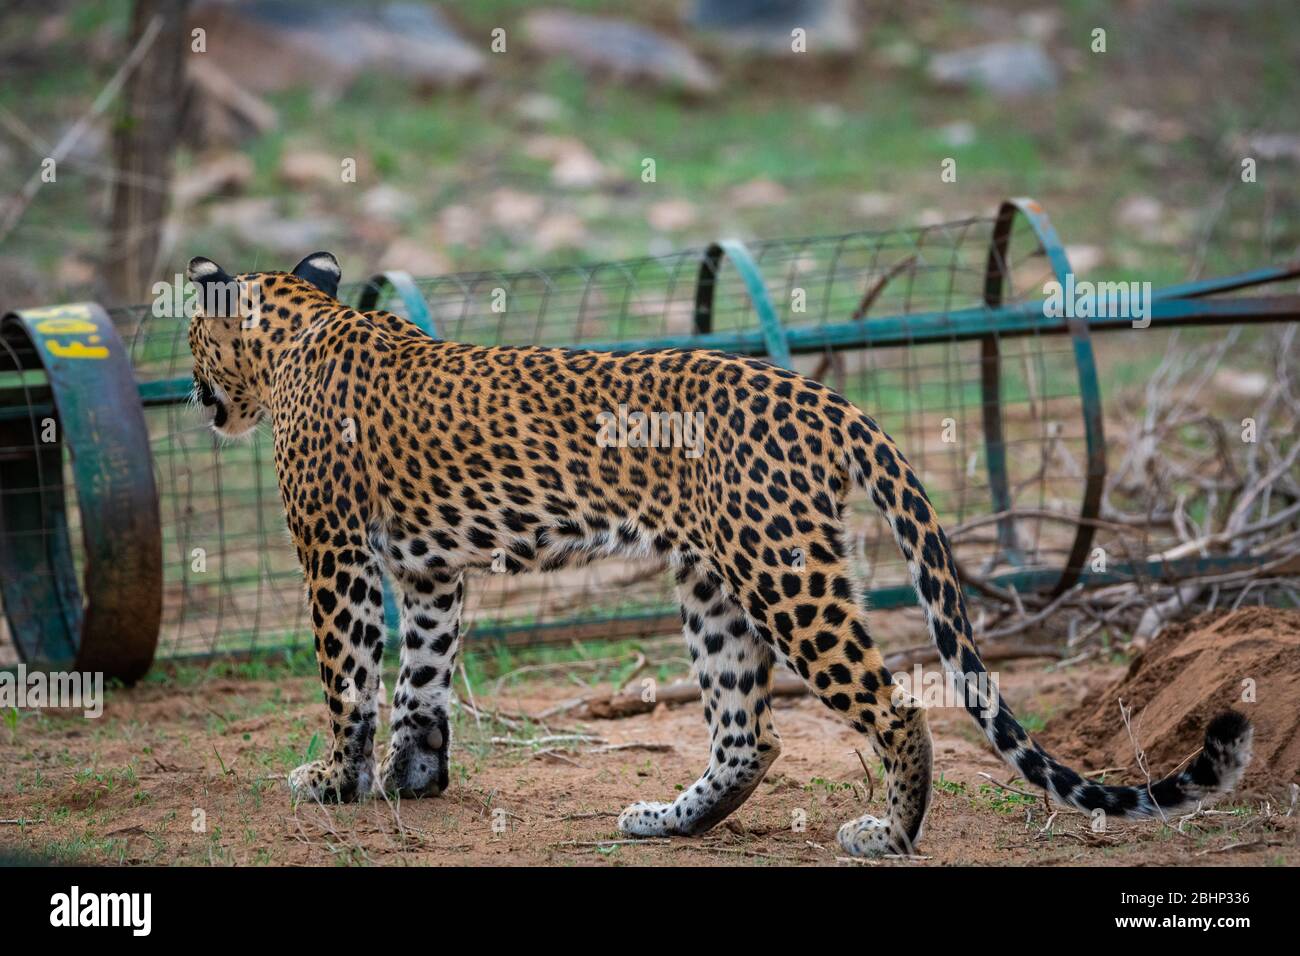 leopardo o panther o panthera pardus in bella sfondo verde alla riserva della foresta di jhalana, jaipur, rajasthan, india Foto Stock